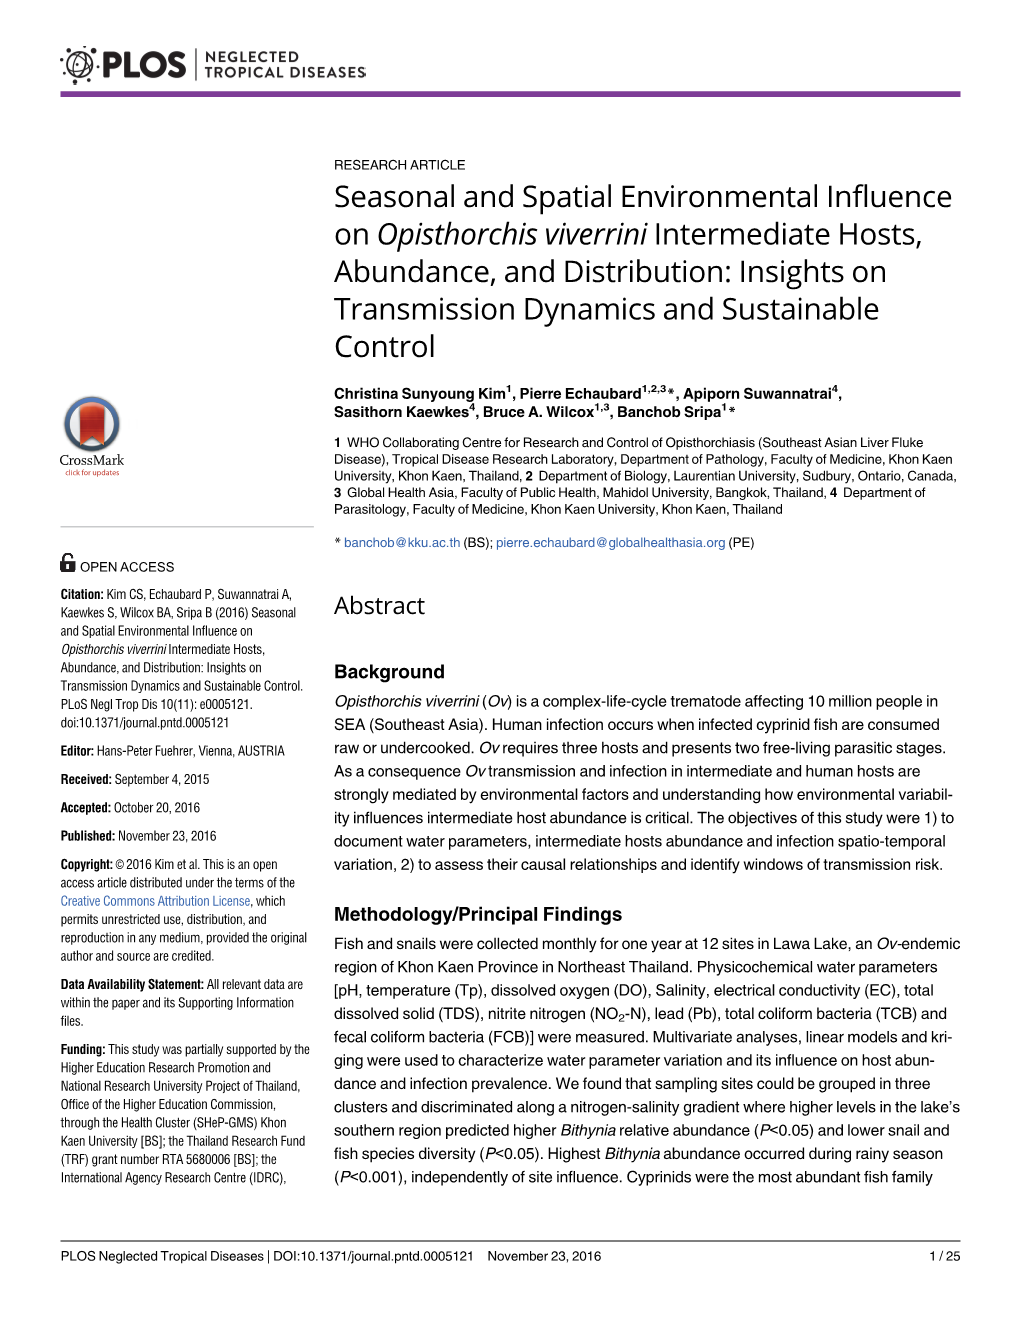 Seasonal and Spatial Environmental Influence On